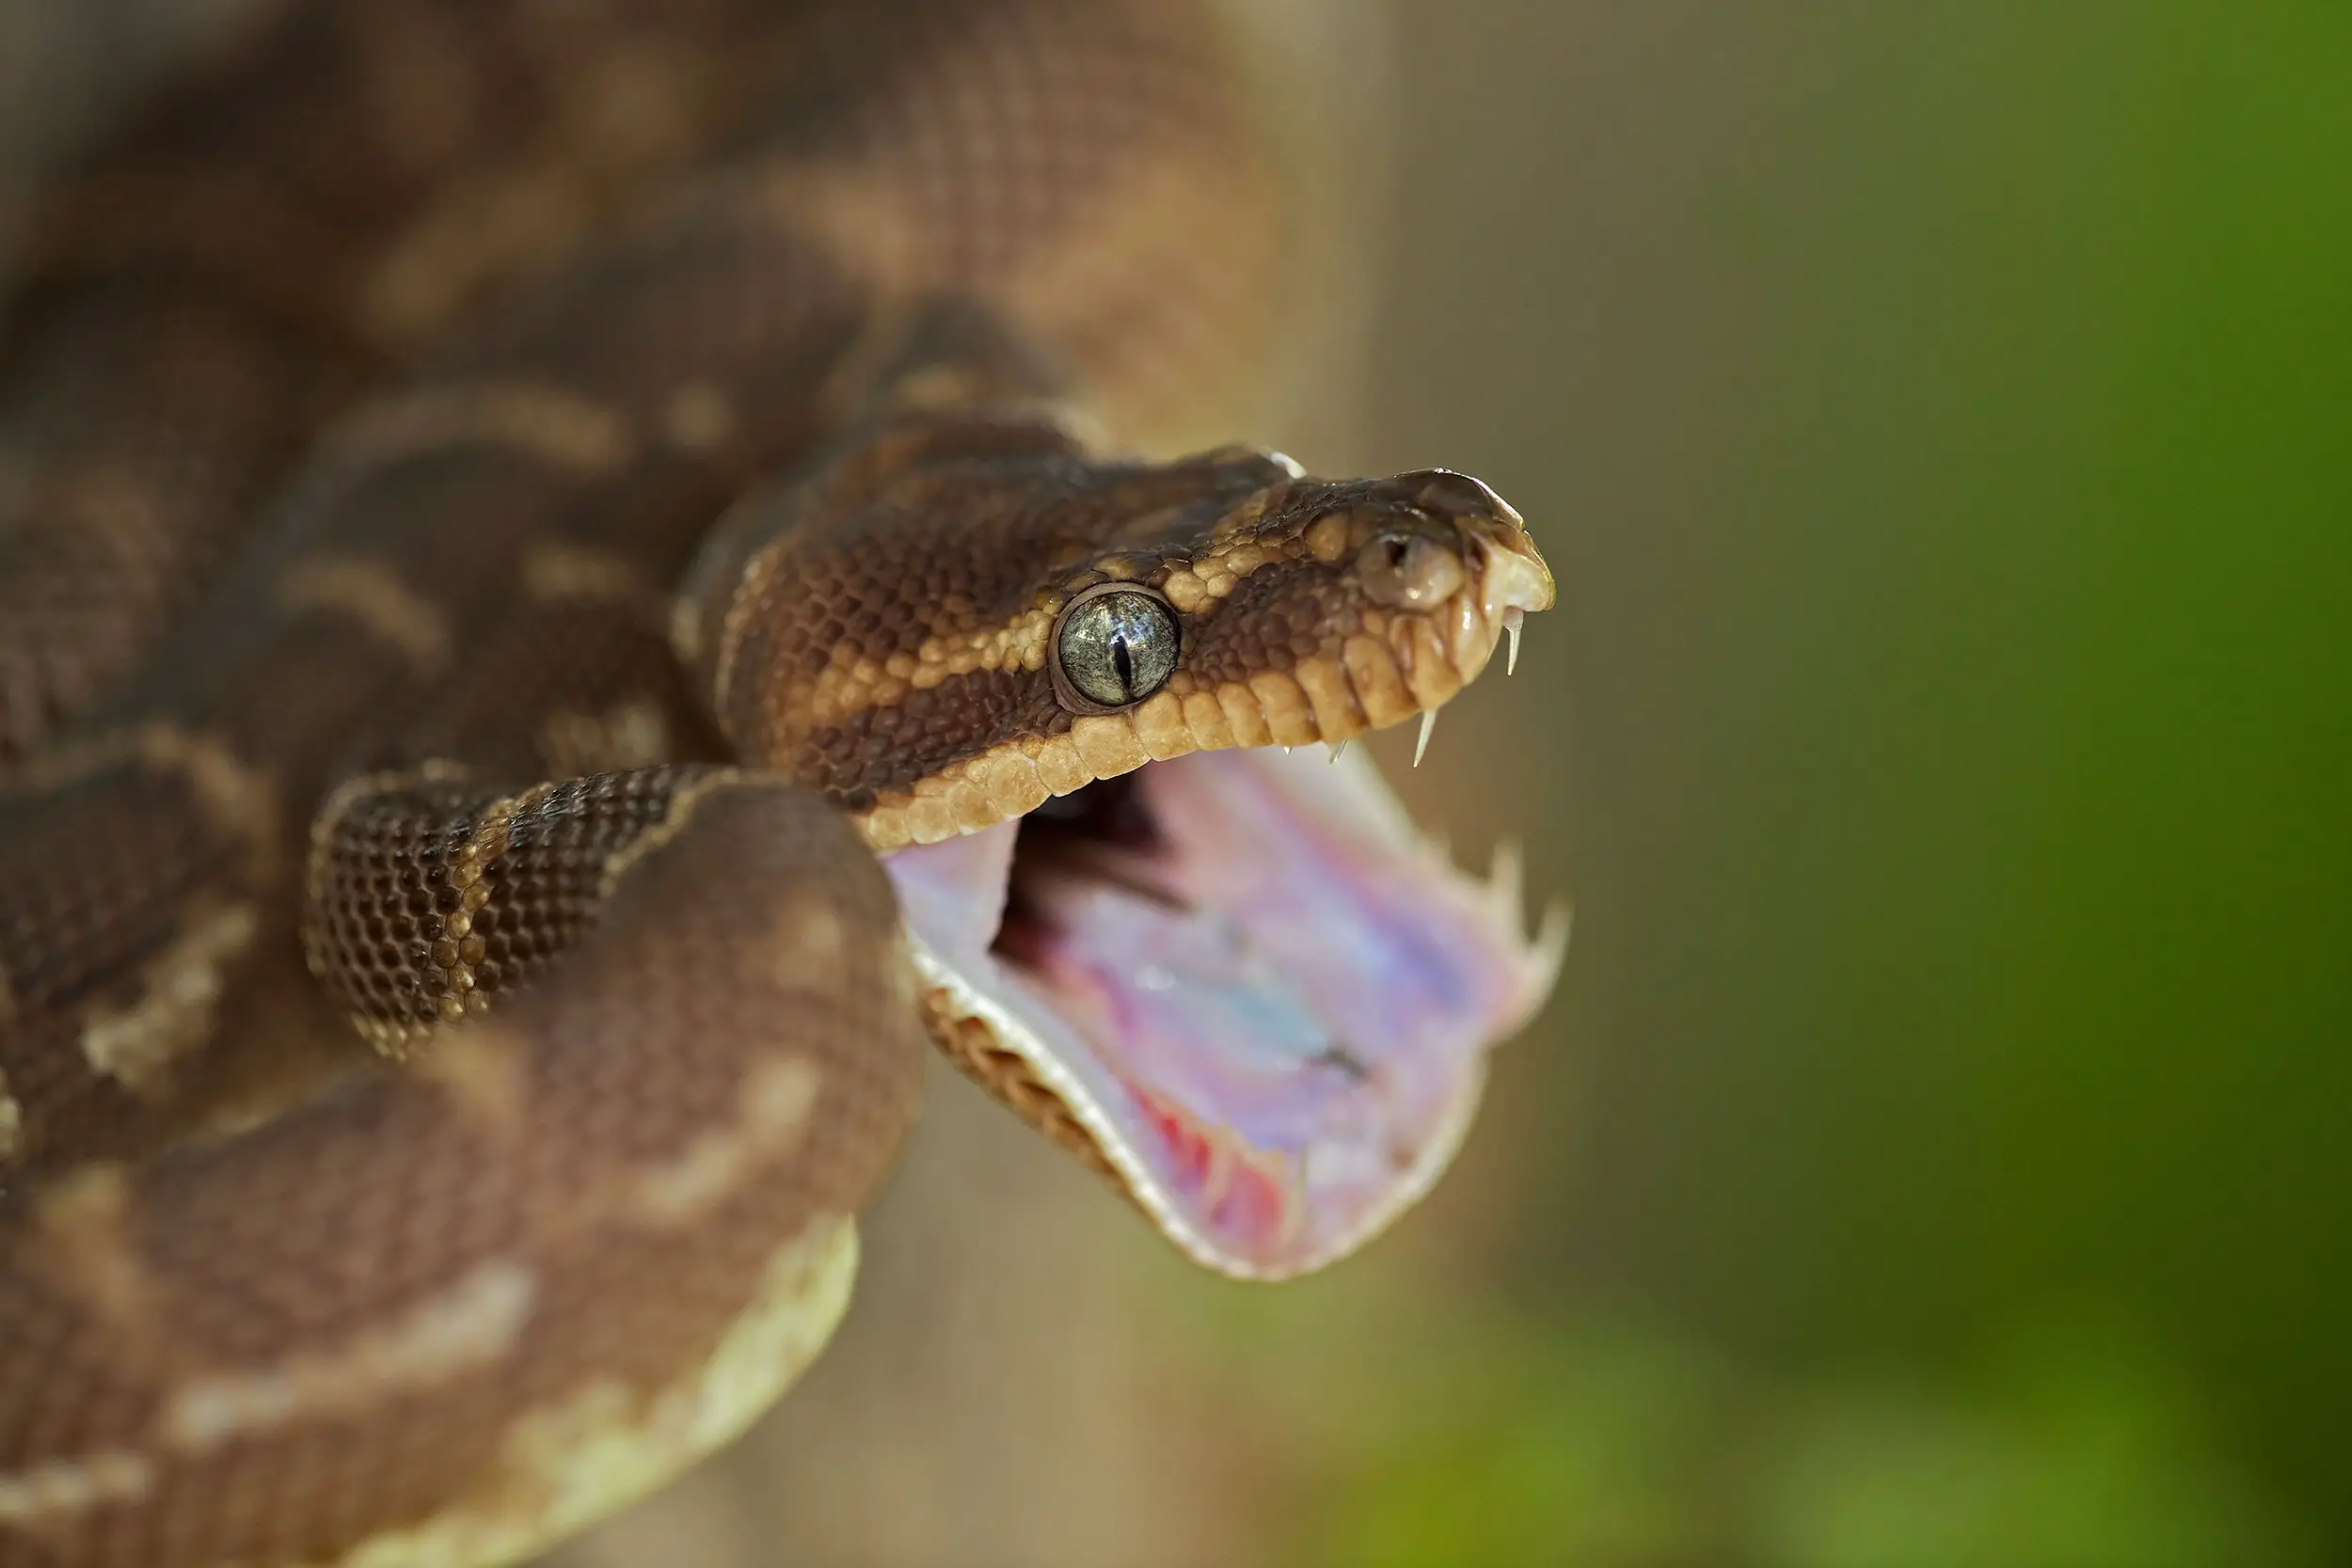 do snakes have teeth